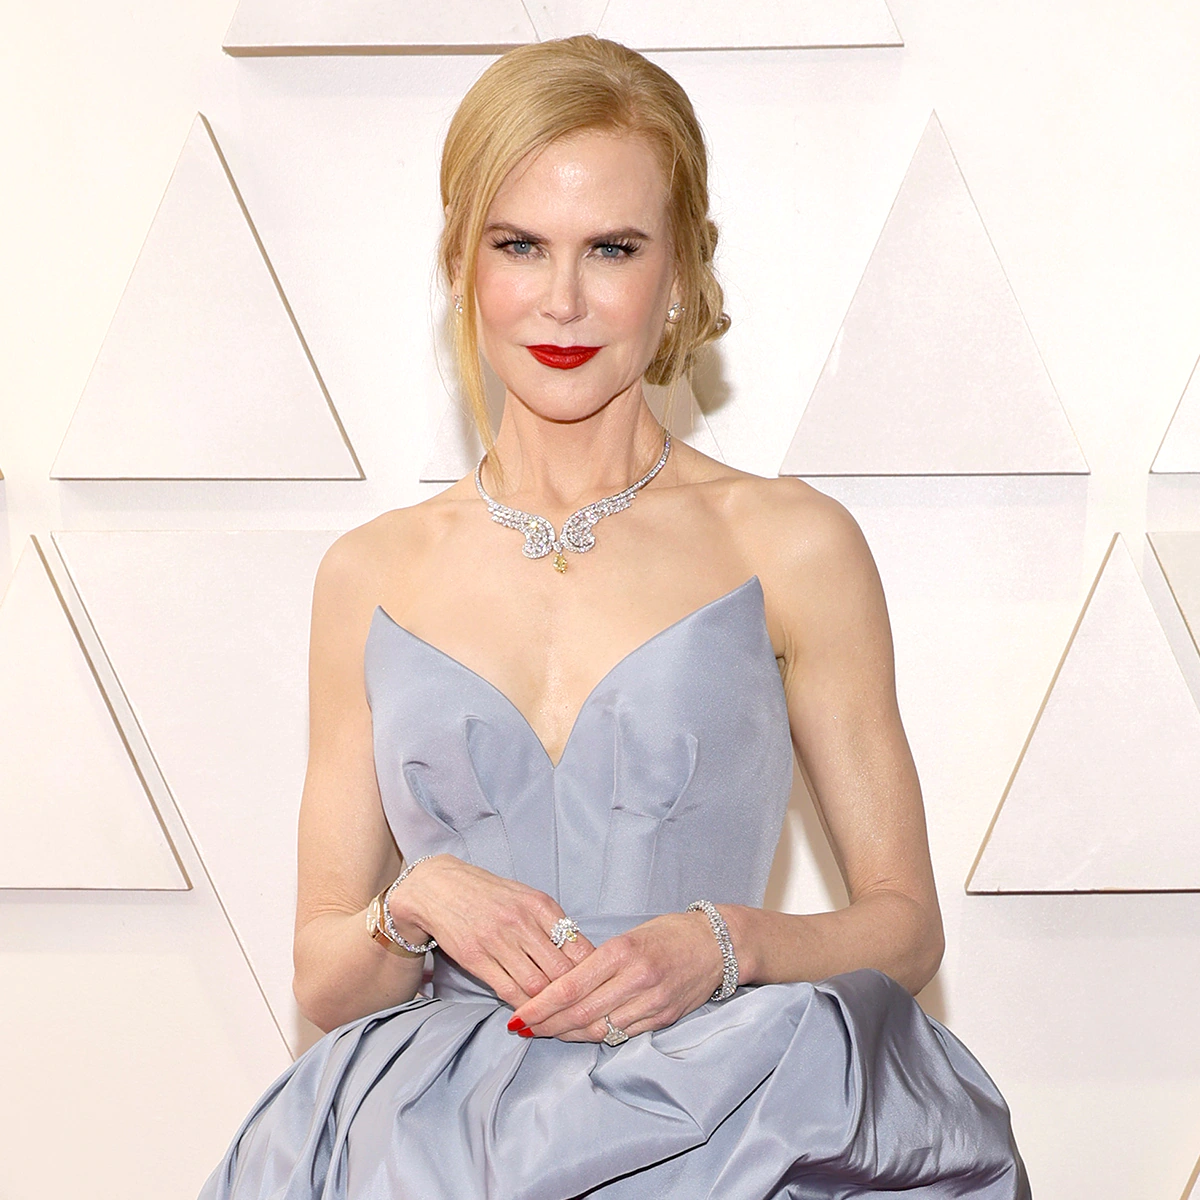 H makeup artist της Nicole Kidman αποκαλύπτει το μυστικό της επιδερμίδας της για τα Oscar!